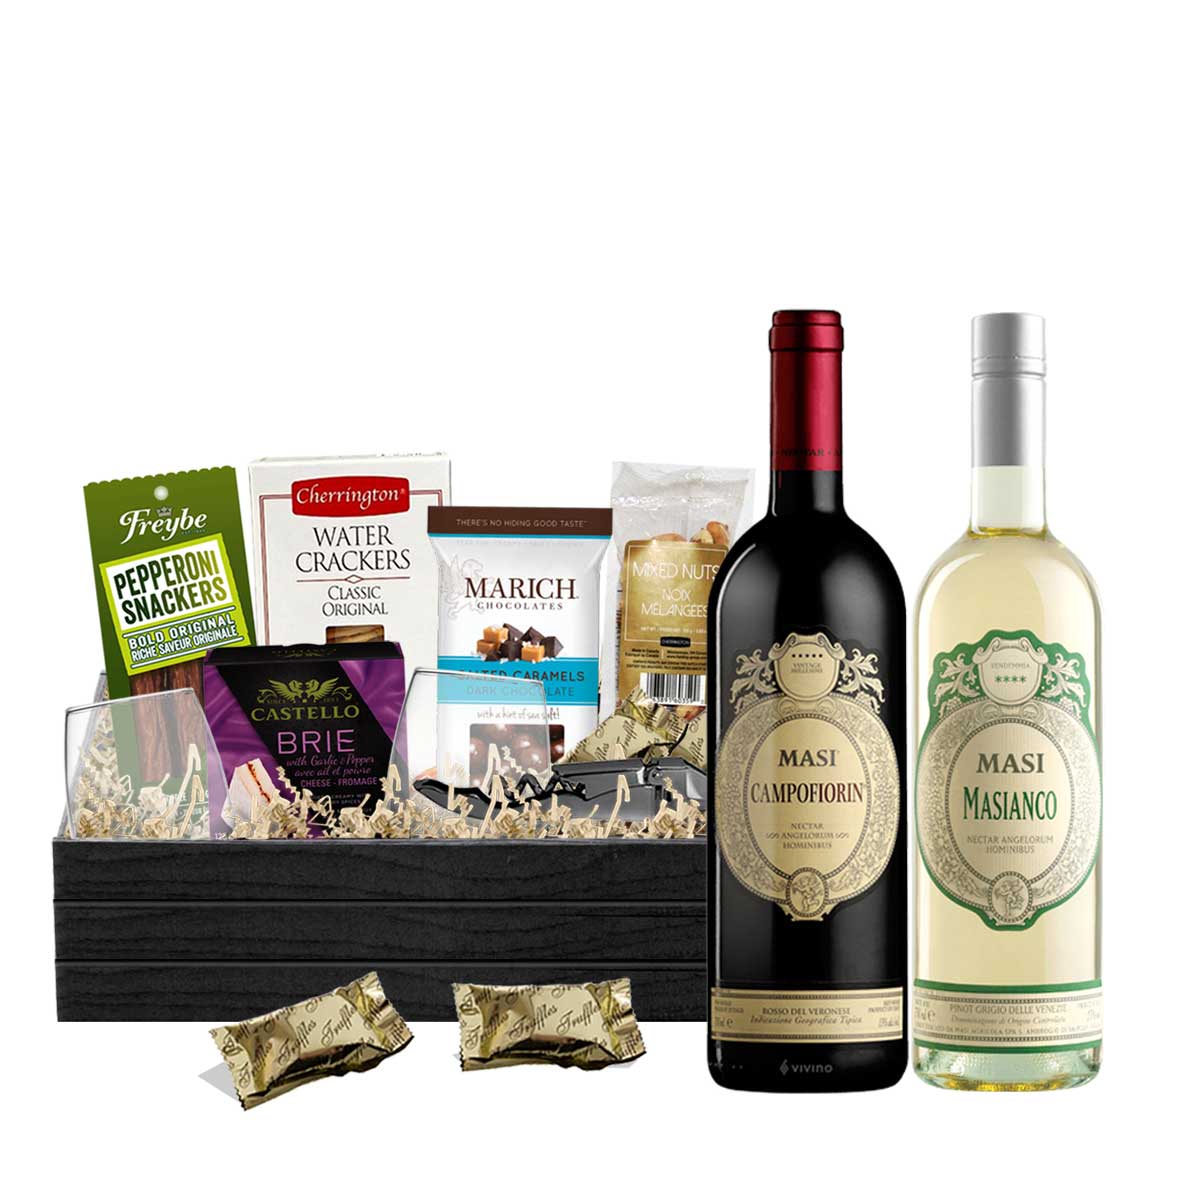 TAG Liquor Stores BC - Masi Campofiorin & Masi Masianco Pinot Grigio 750ml x 2 Gift Basket